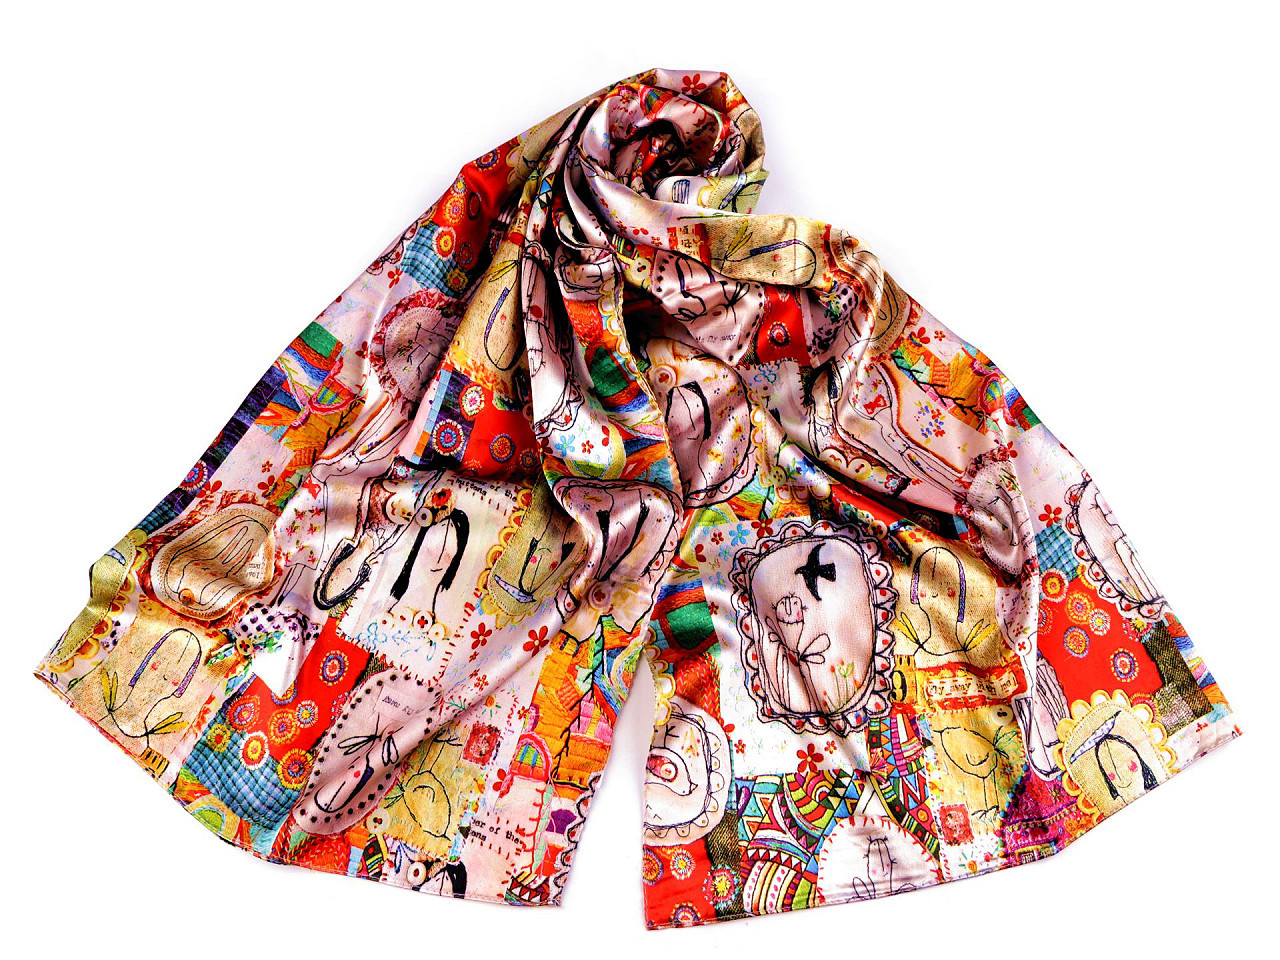 Saténový šátek / šála 70x165 cm, barva 41 multikolor